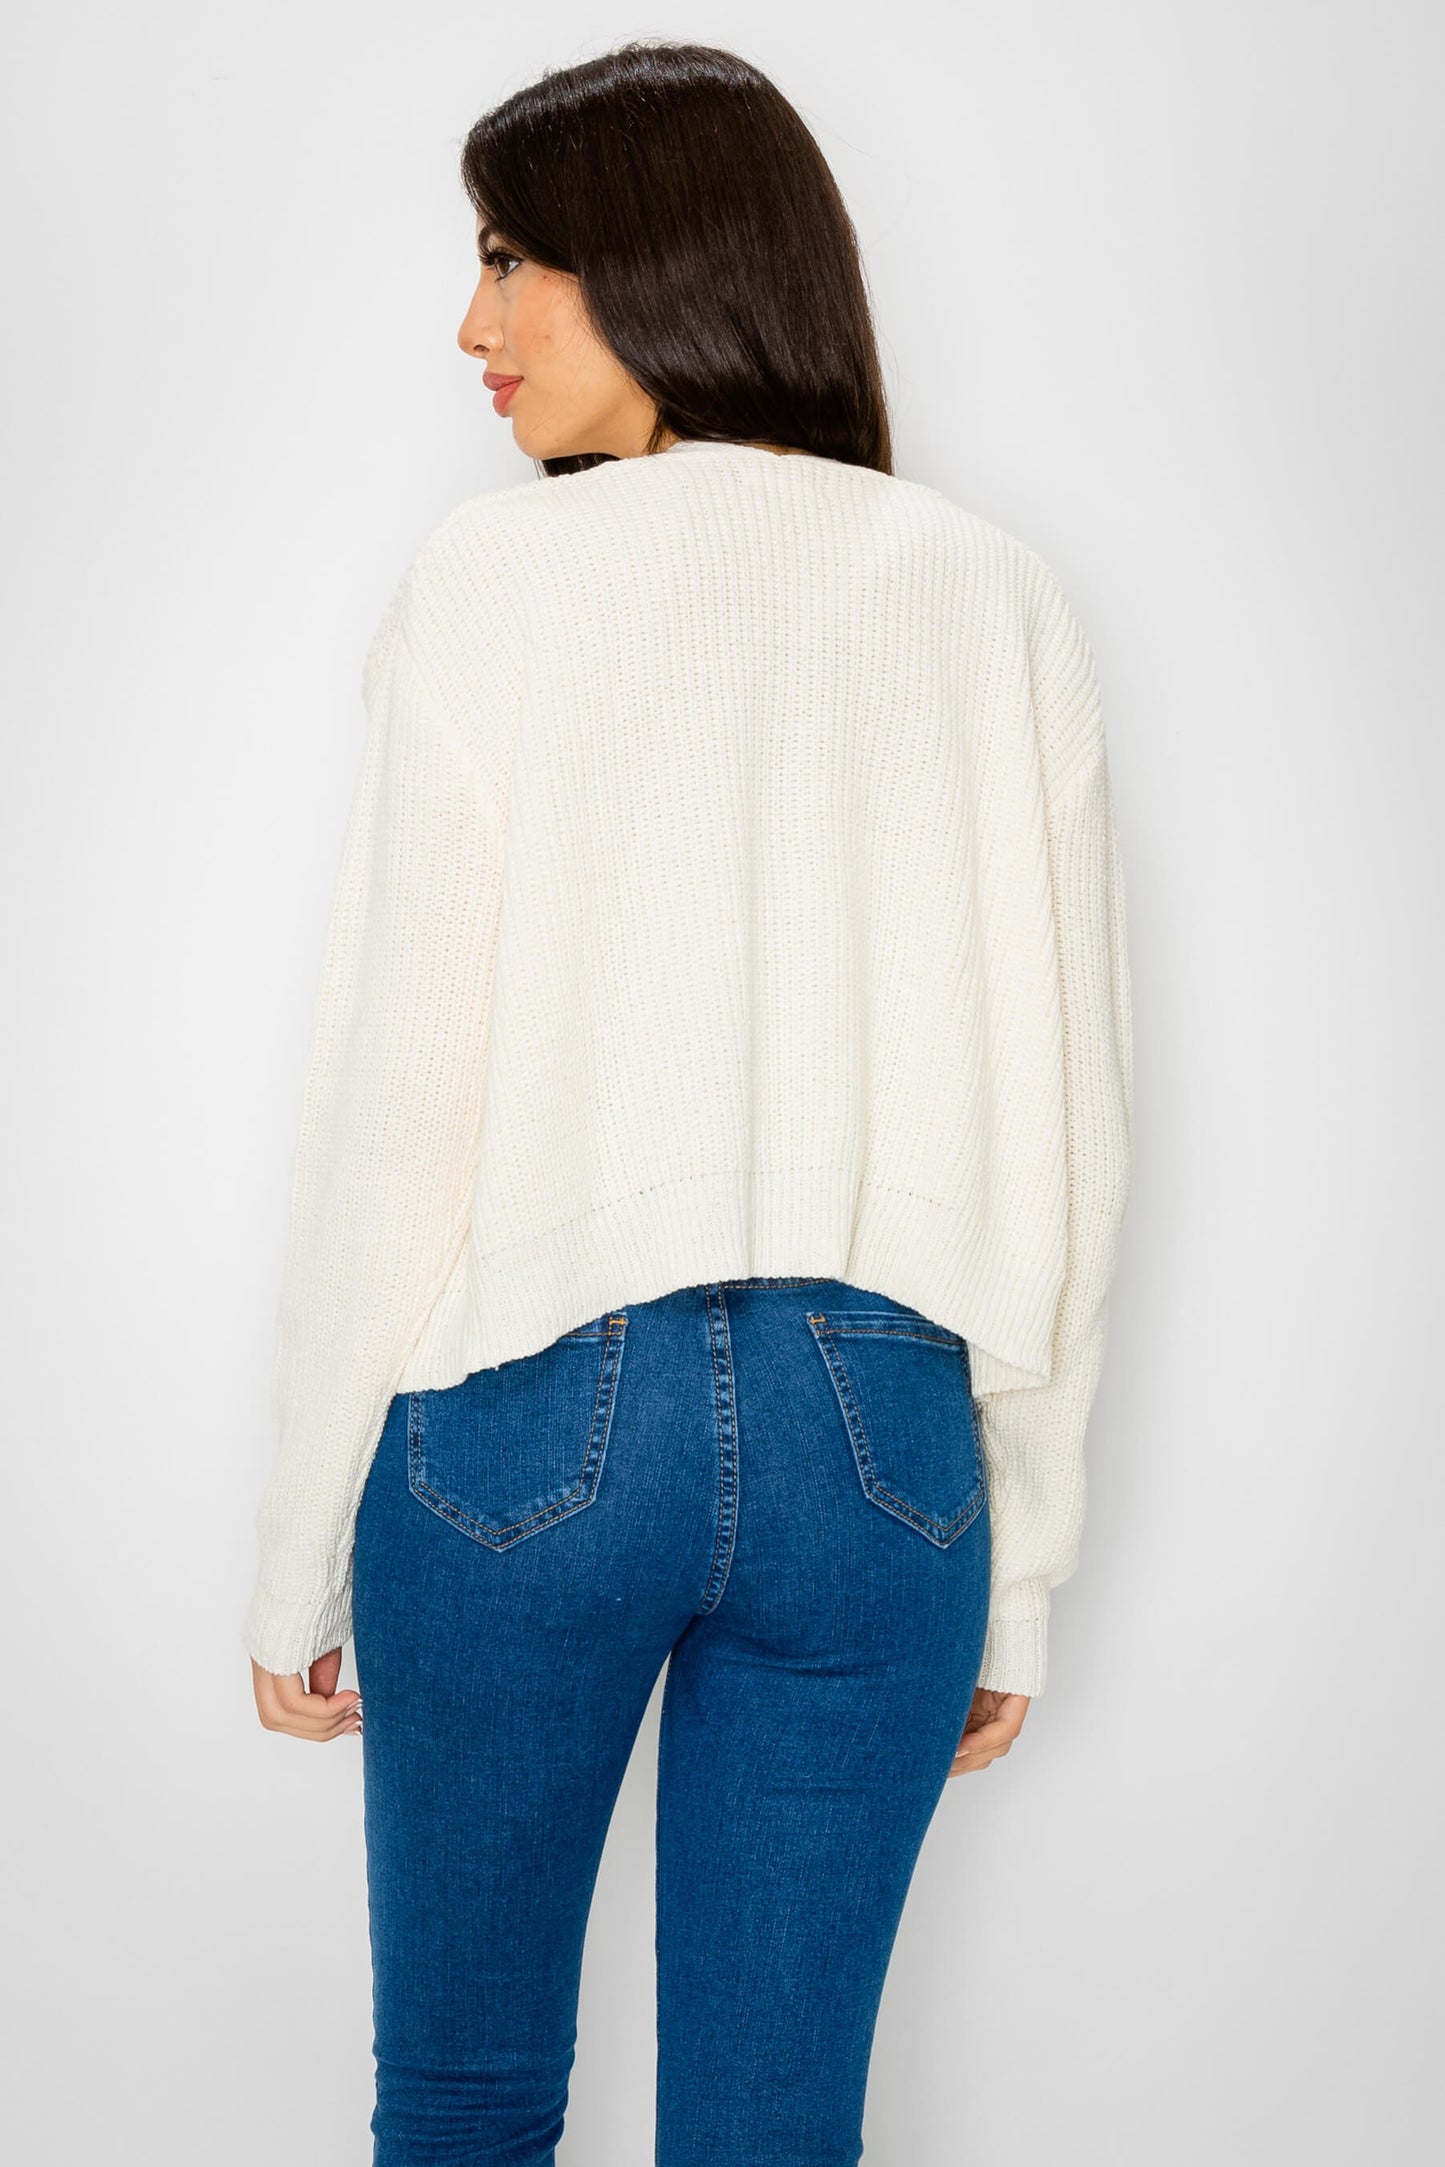 Vintage Loose Fit Cardigan Sweater